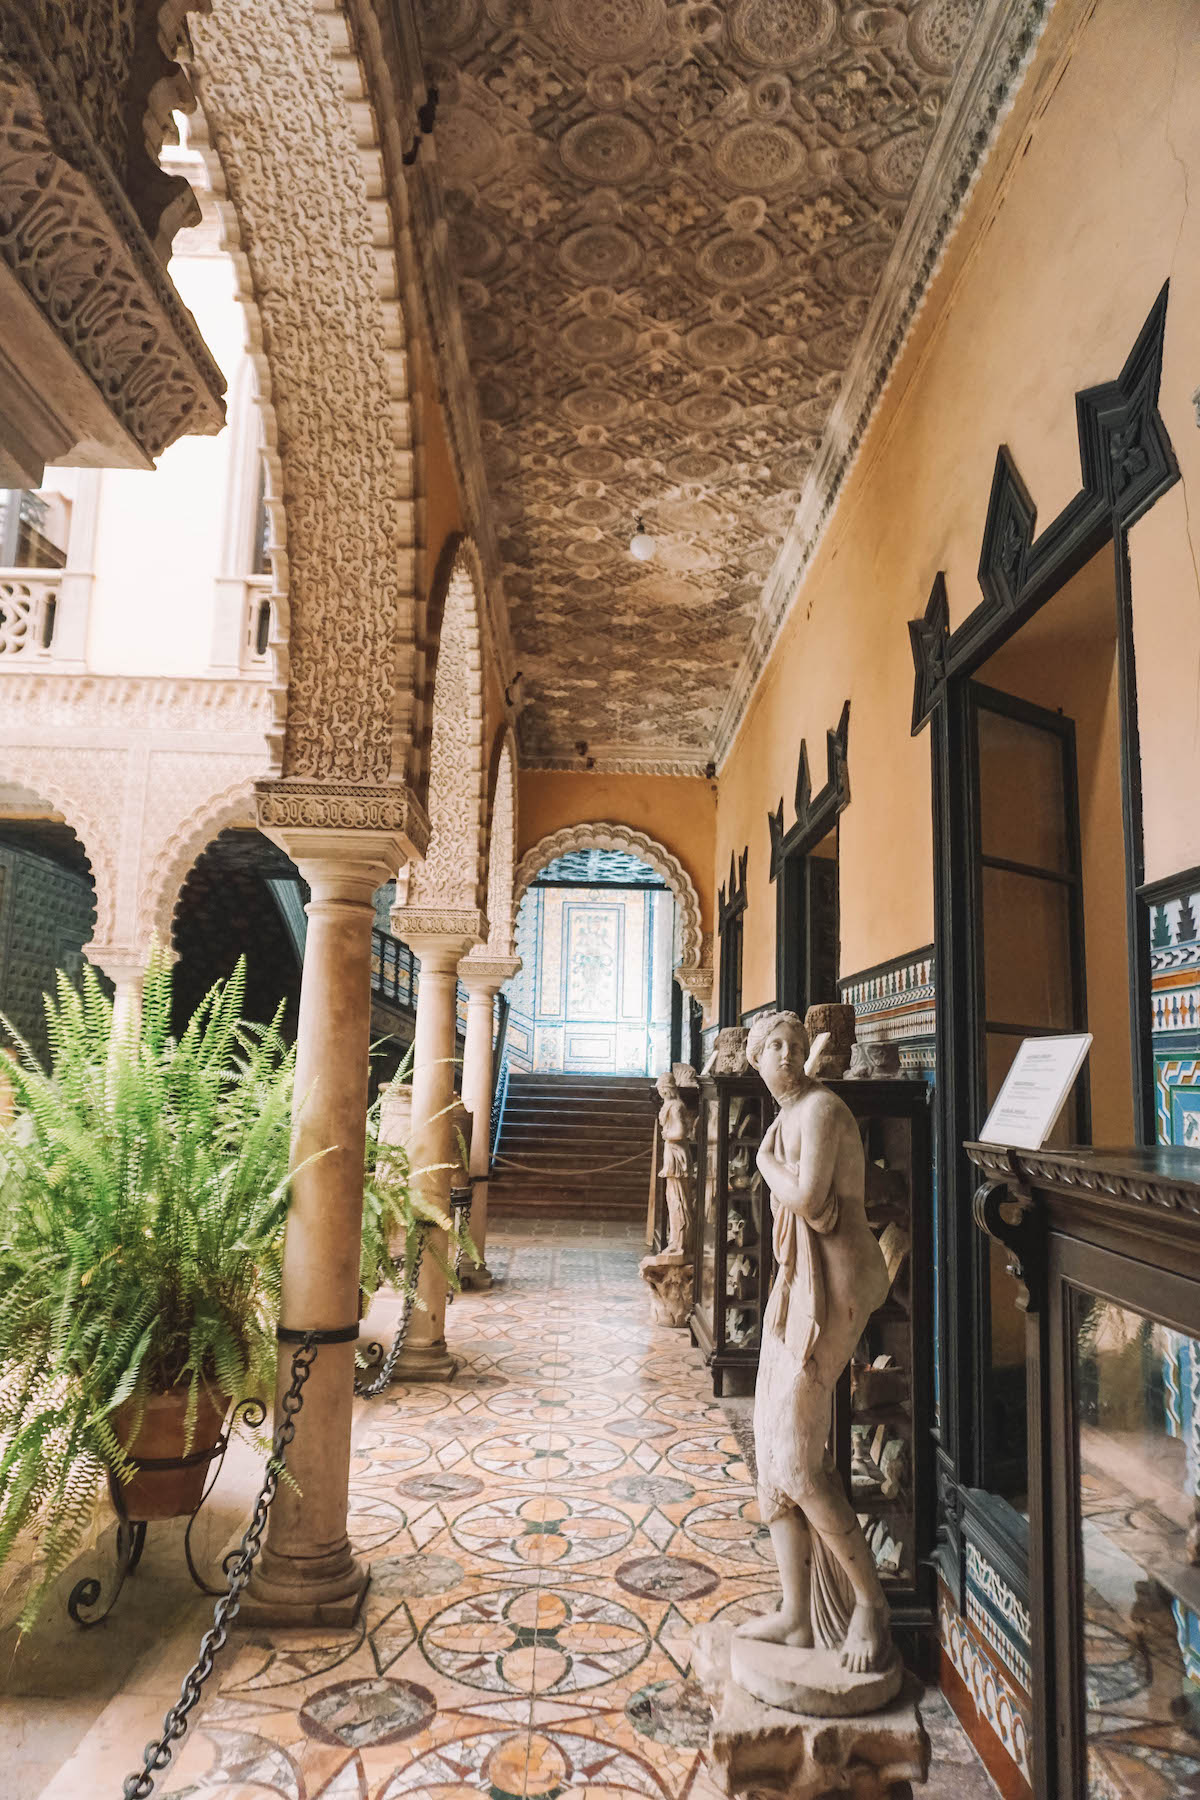 Hallway with statues and plants in Palacio de Lebrija.